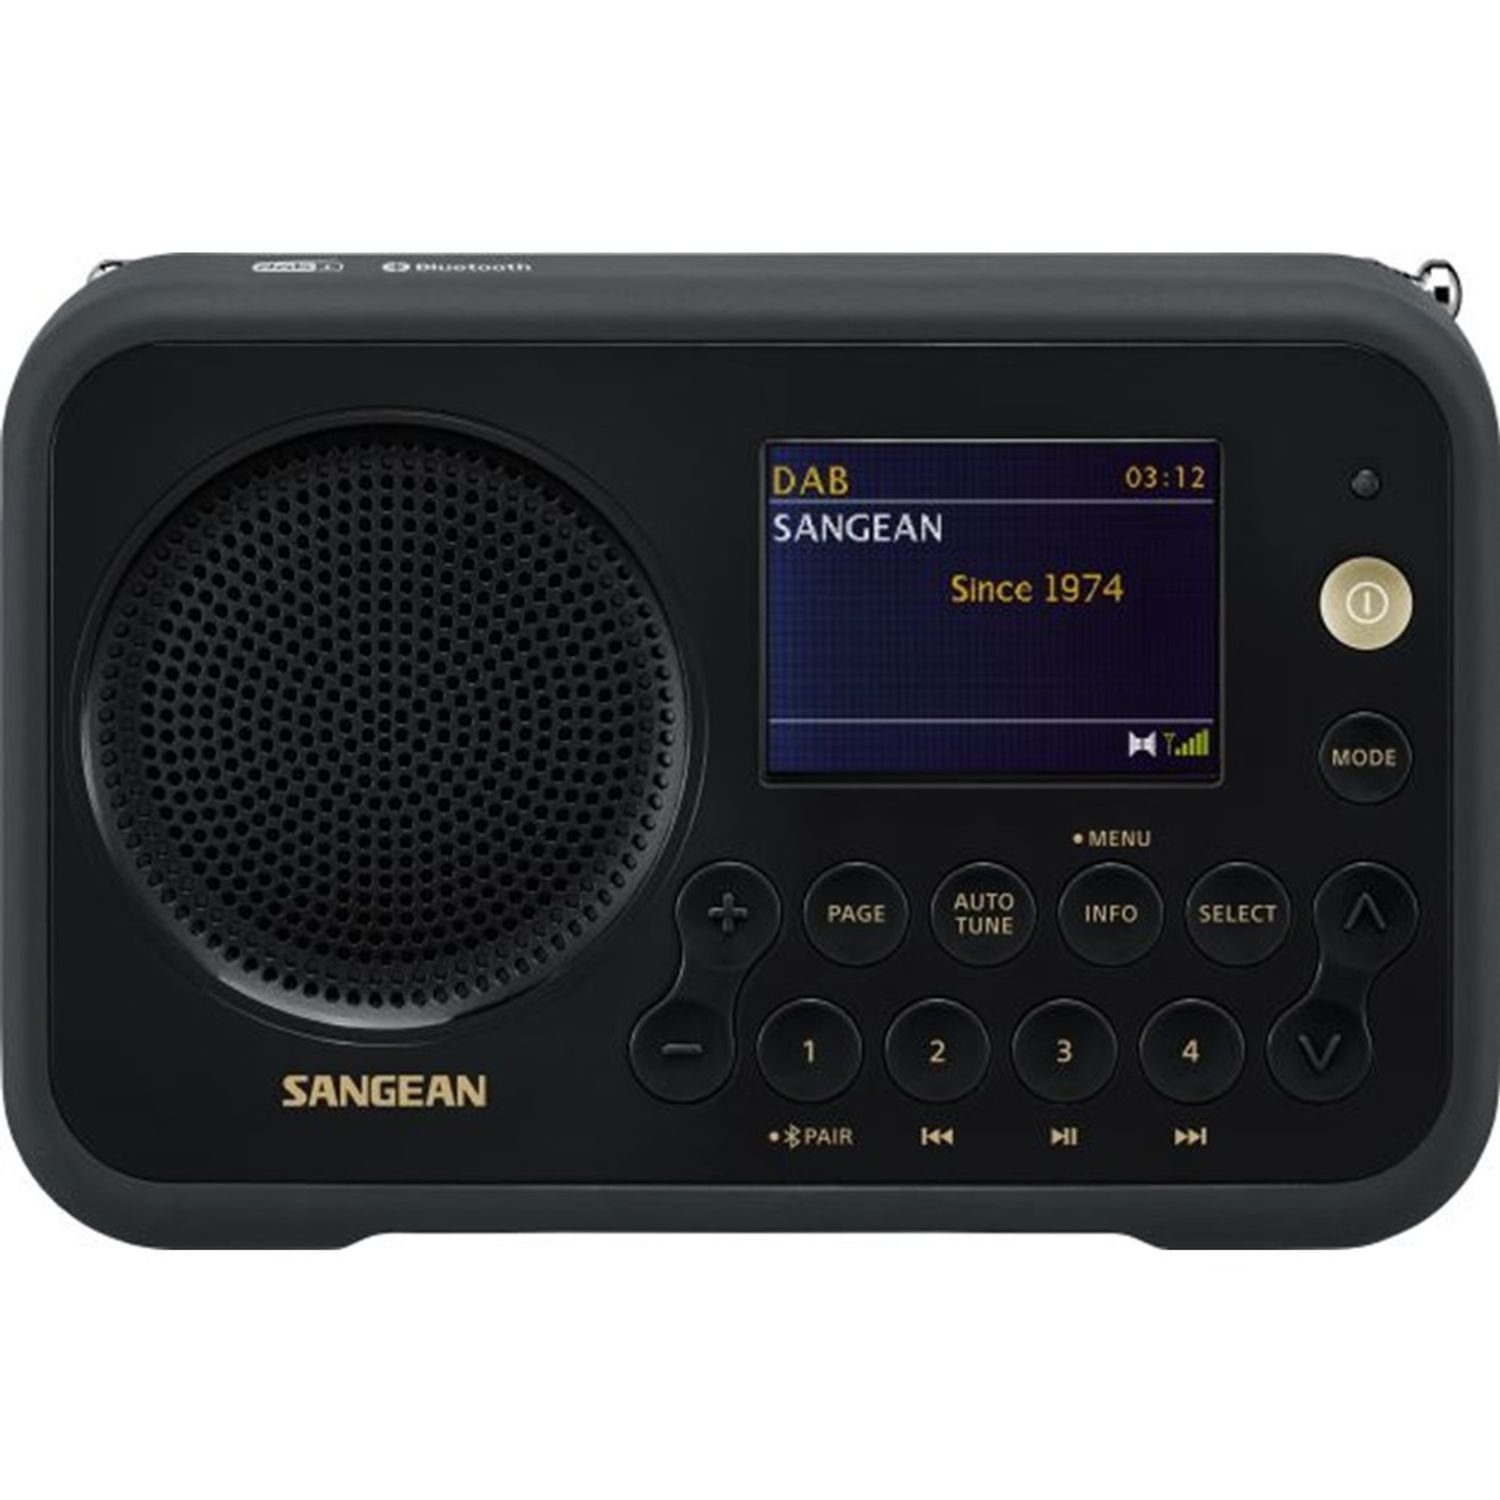 Digitalradio DAB+ (DAB) mit / Sangean Digitalempfänger (DAB) FM-RDS DPR-76